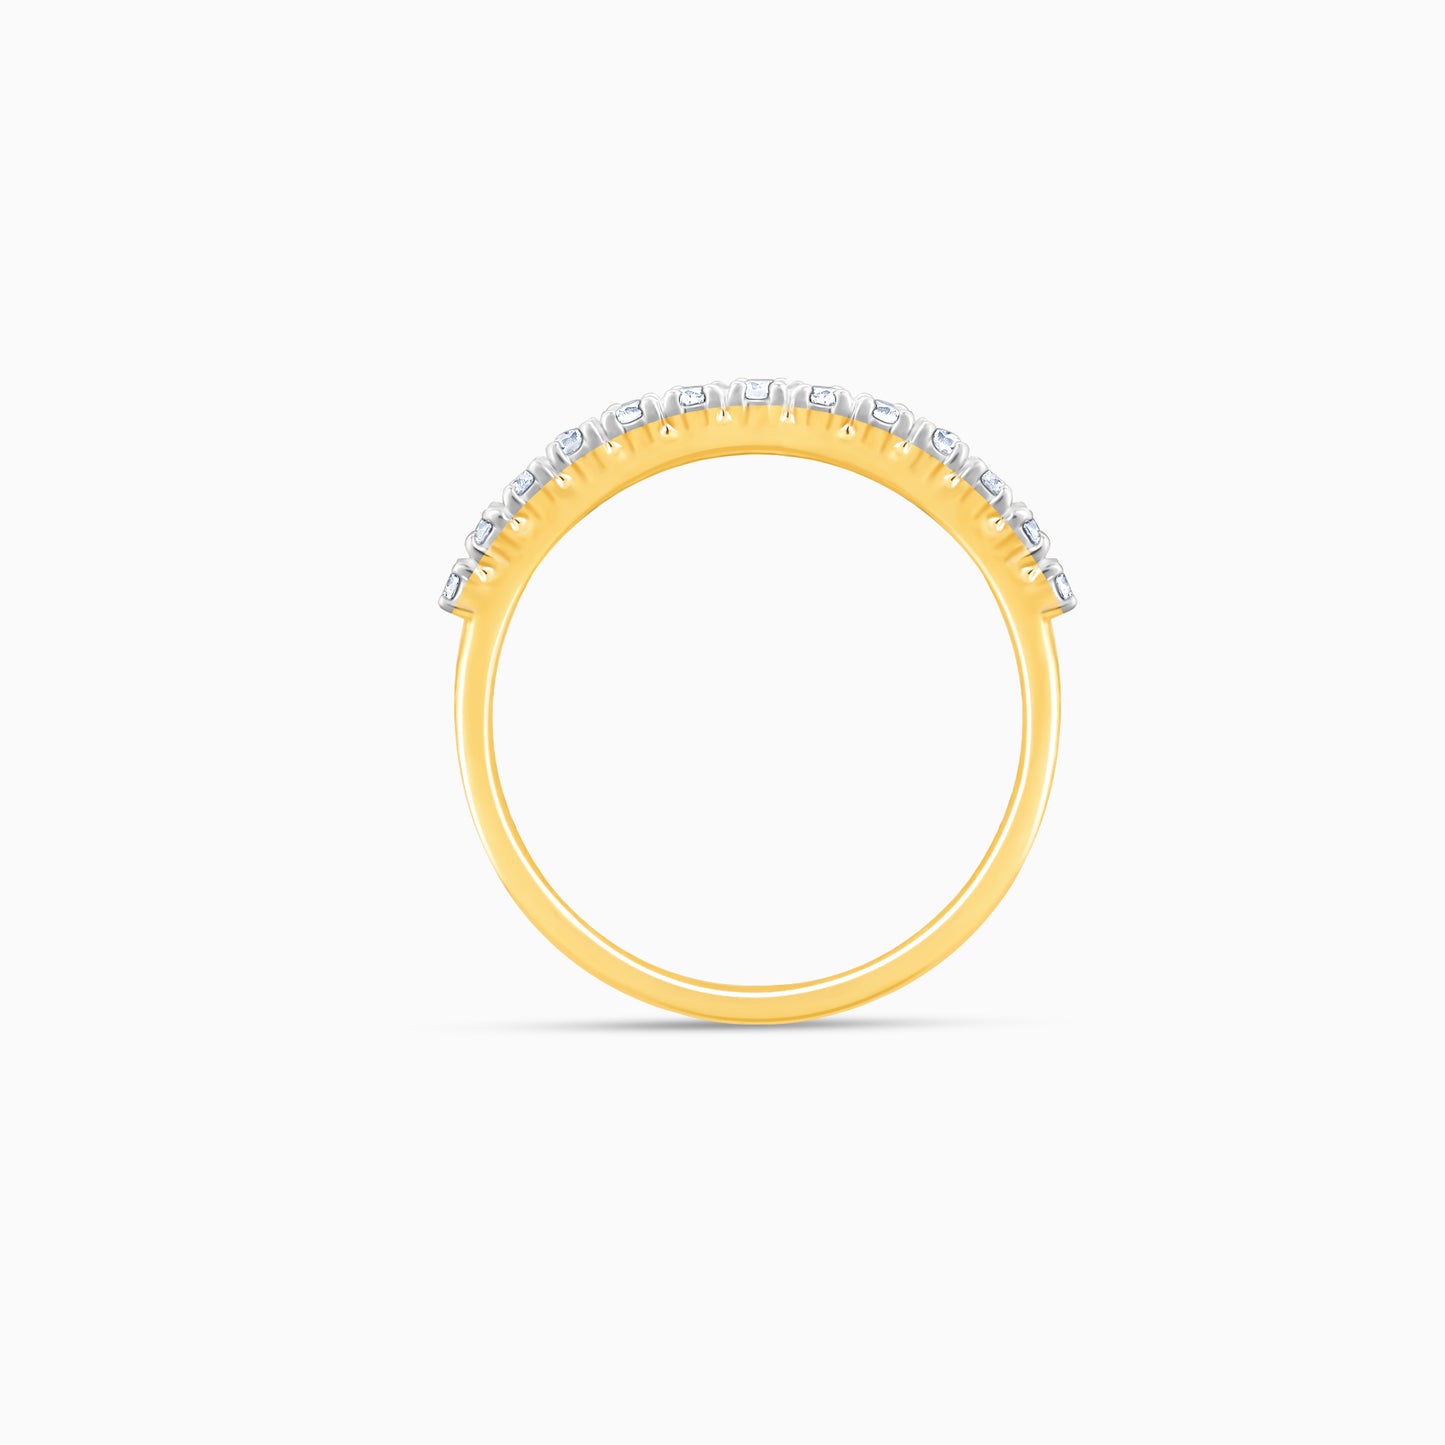 Gold Shimmering Gleam Diamond Ring